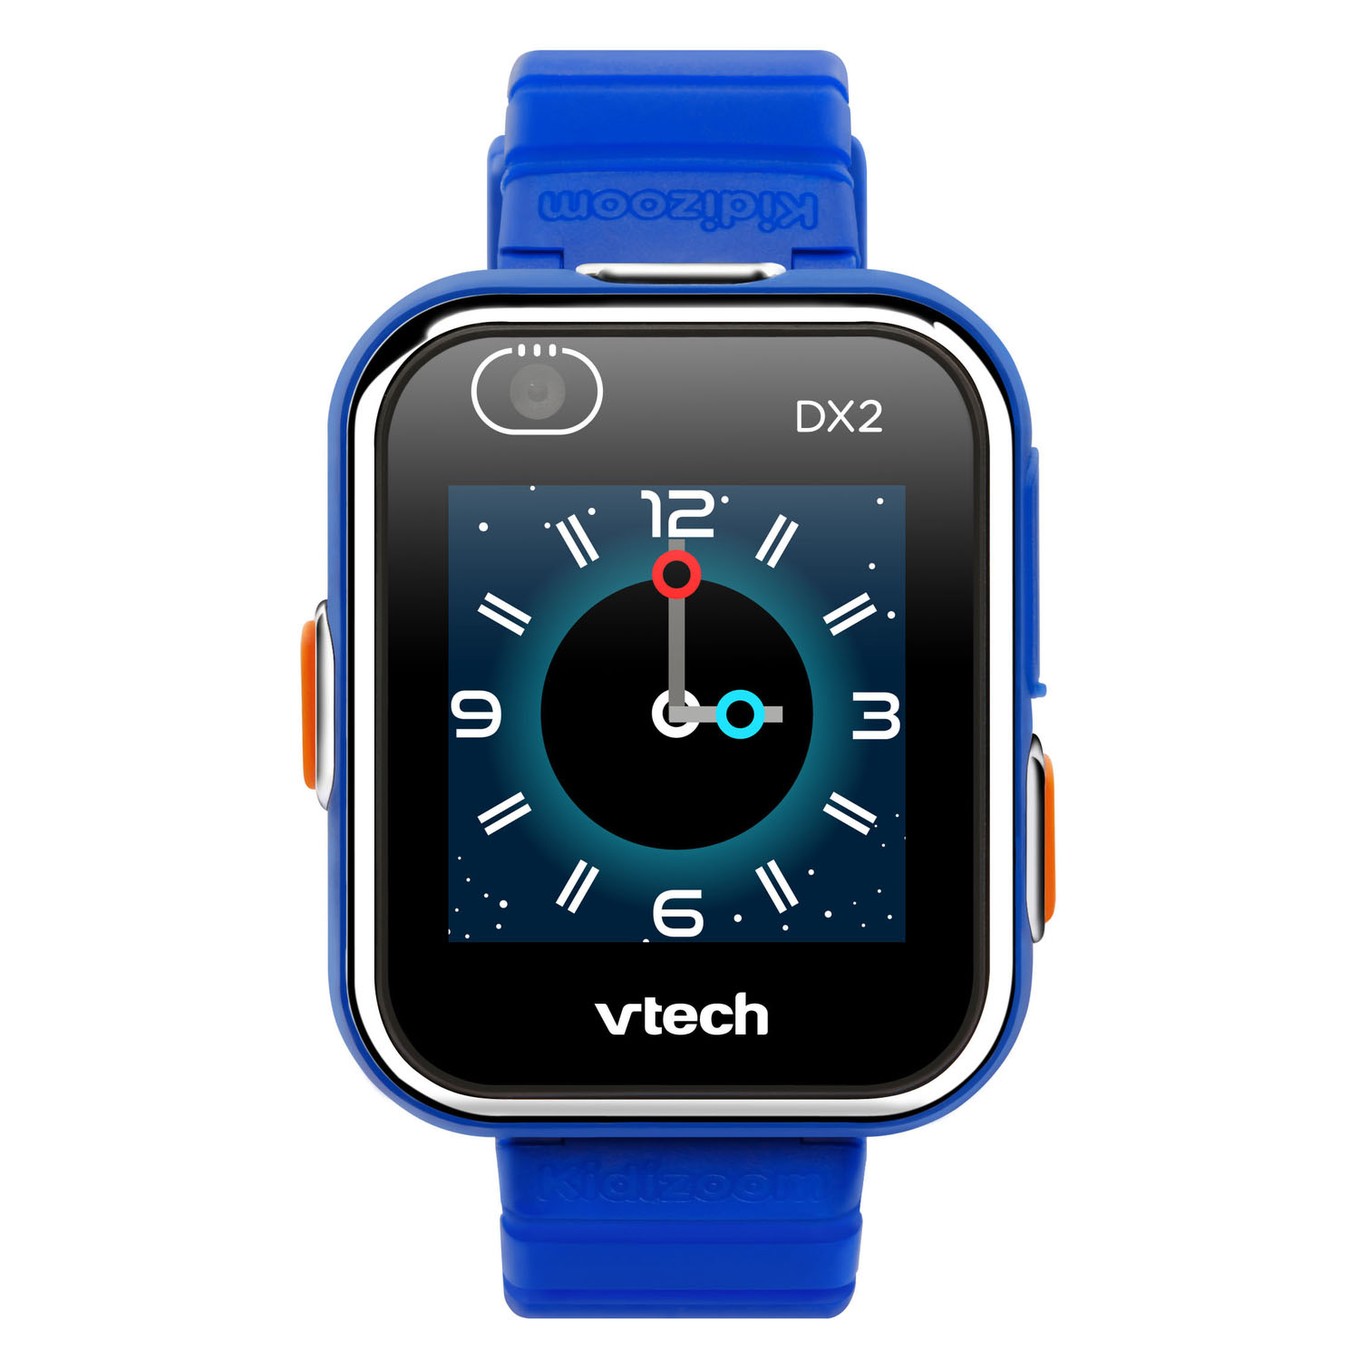 vtech kidizoom smartwatch australia